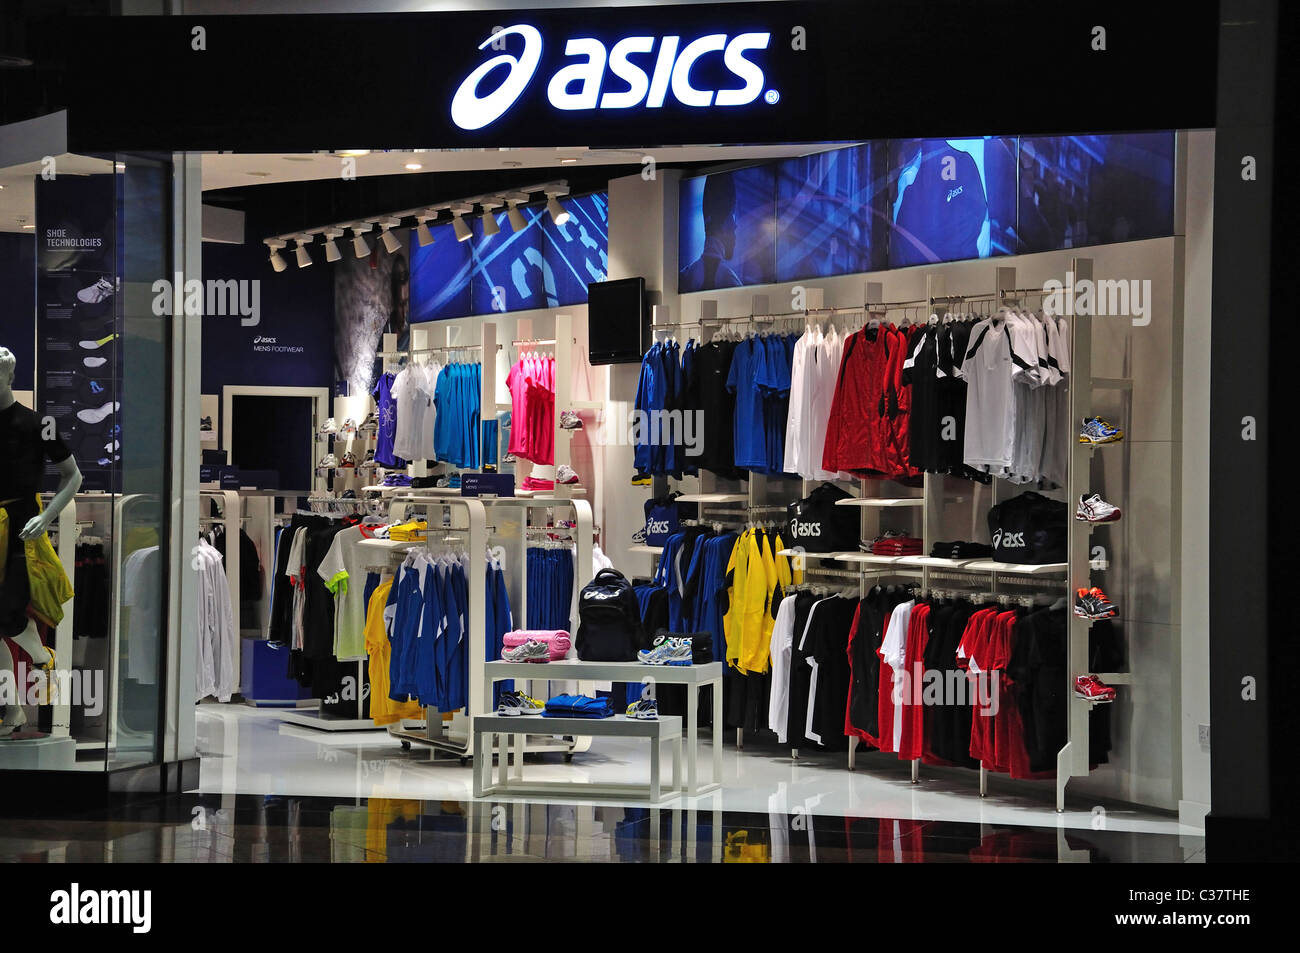 asics shop in delhi